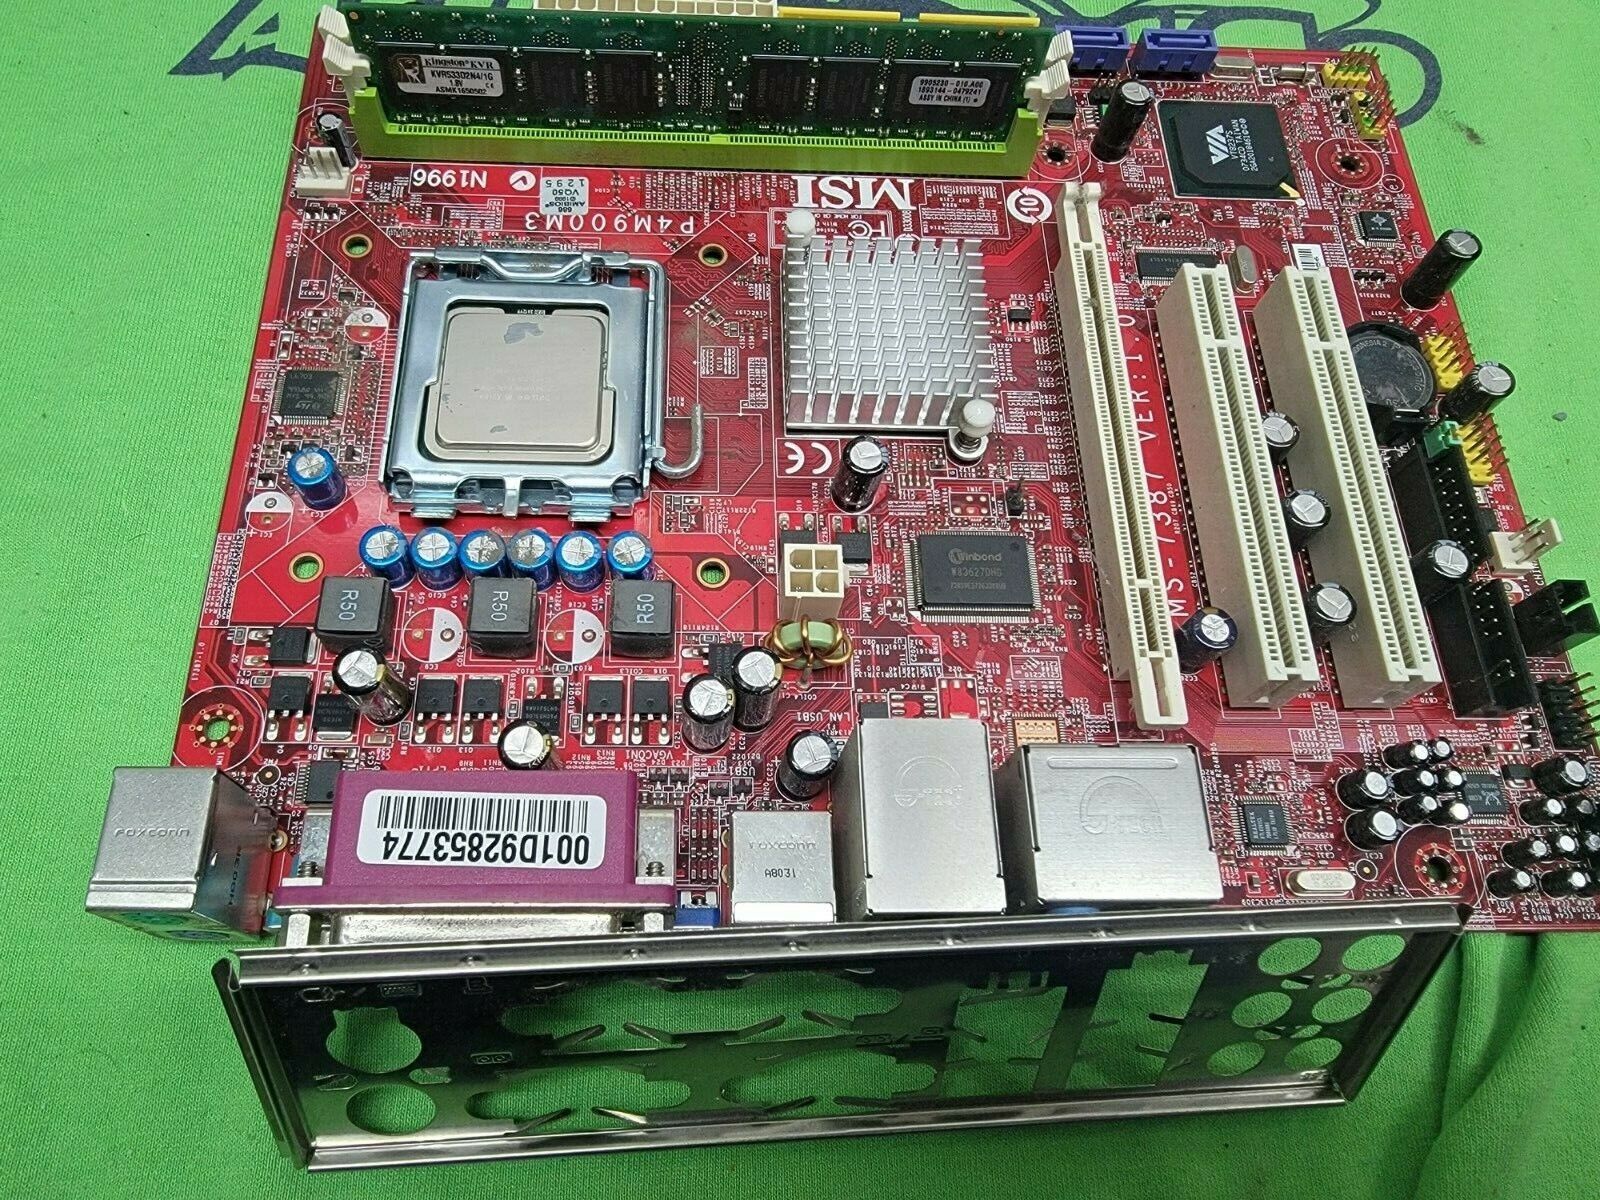 MSI P4M900M3, MS-7387,VER 1.0  Pentium Dual Core, 2.00Ghz, 1GB DDR2, I/O Shield